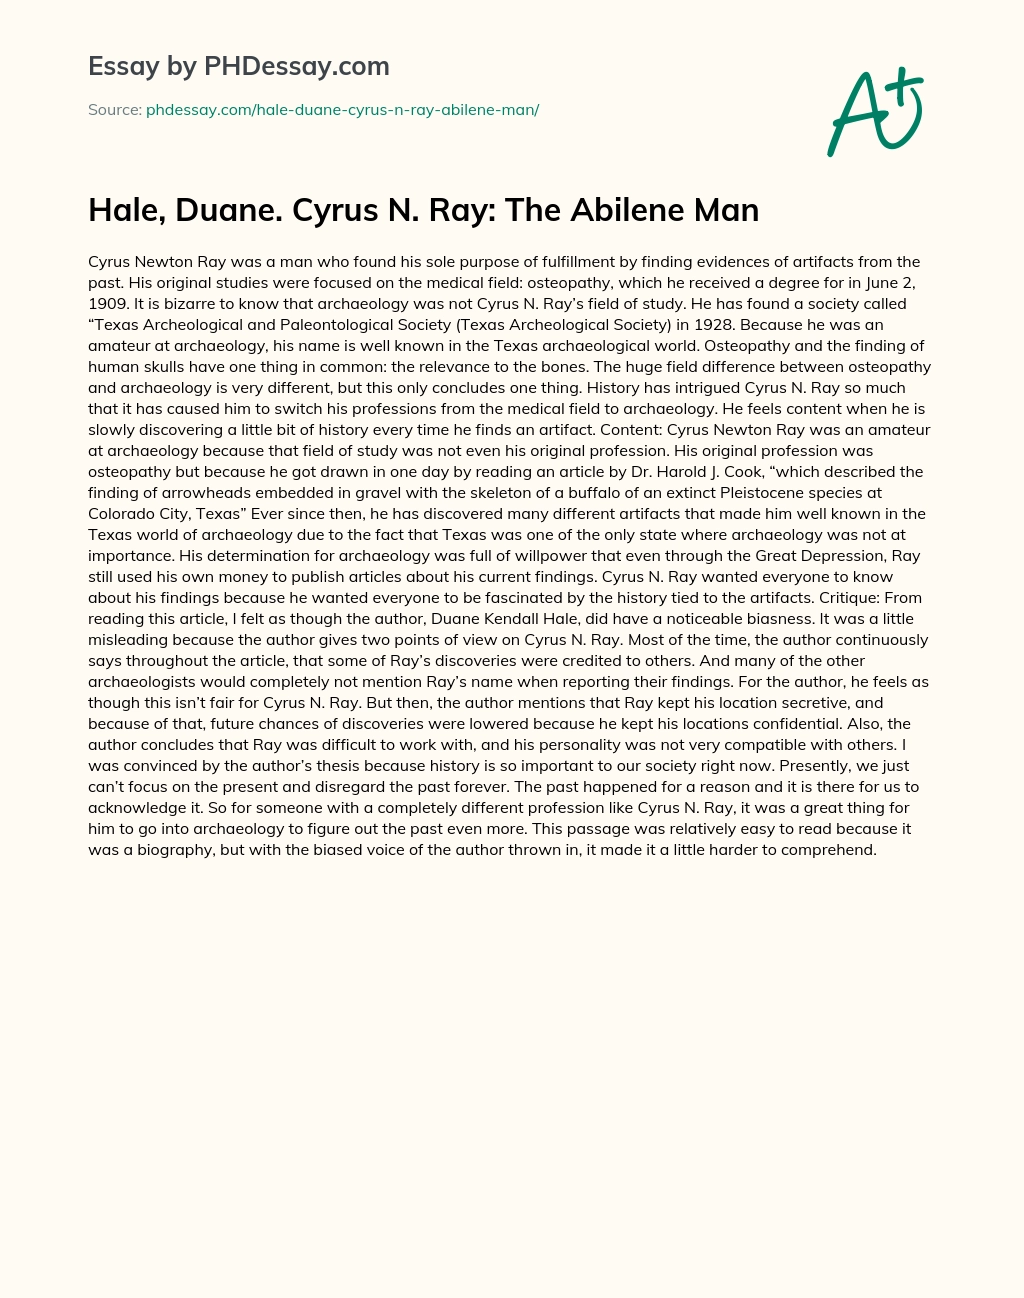 Hale, Duane. Cyrus N. Ray: The Abilene Man essay